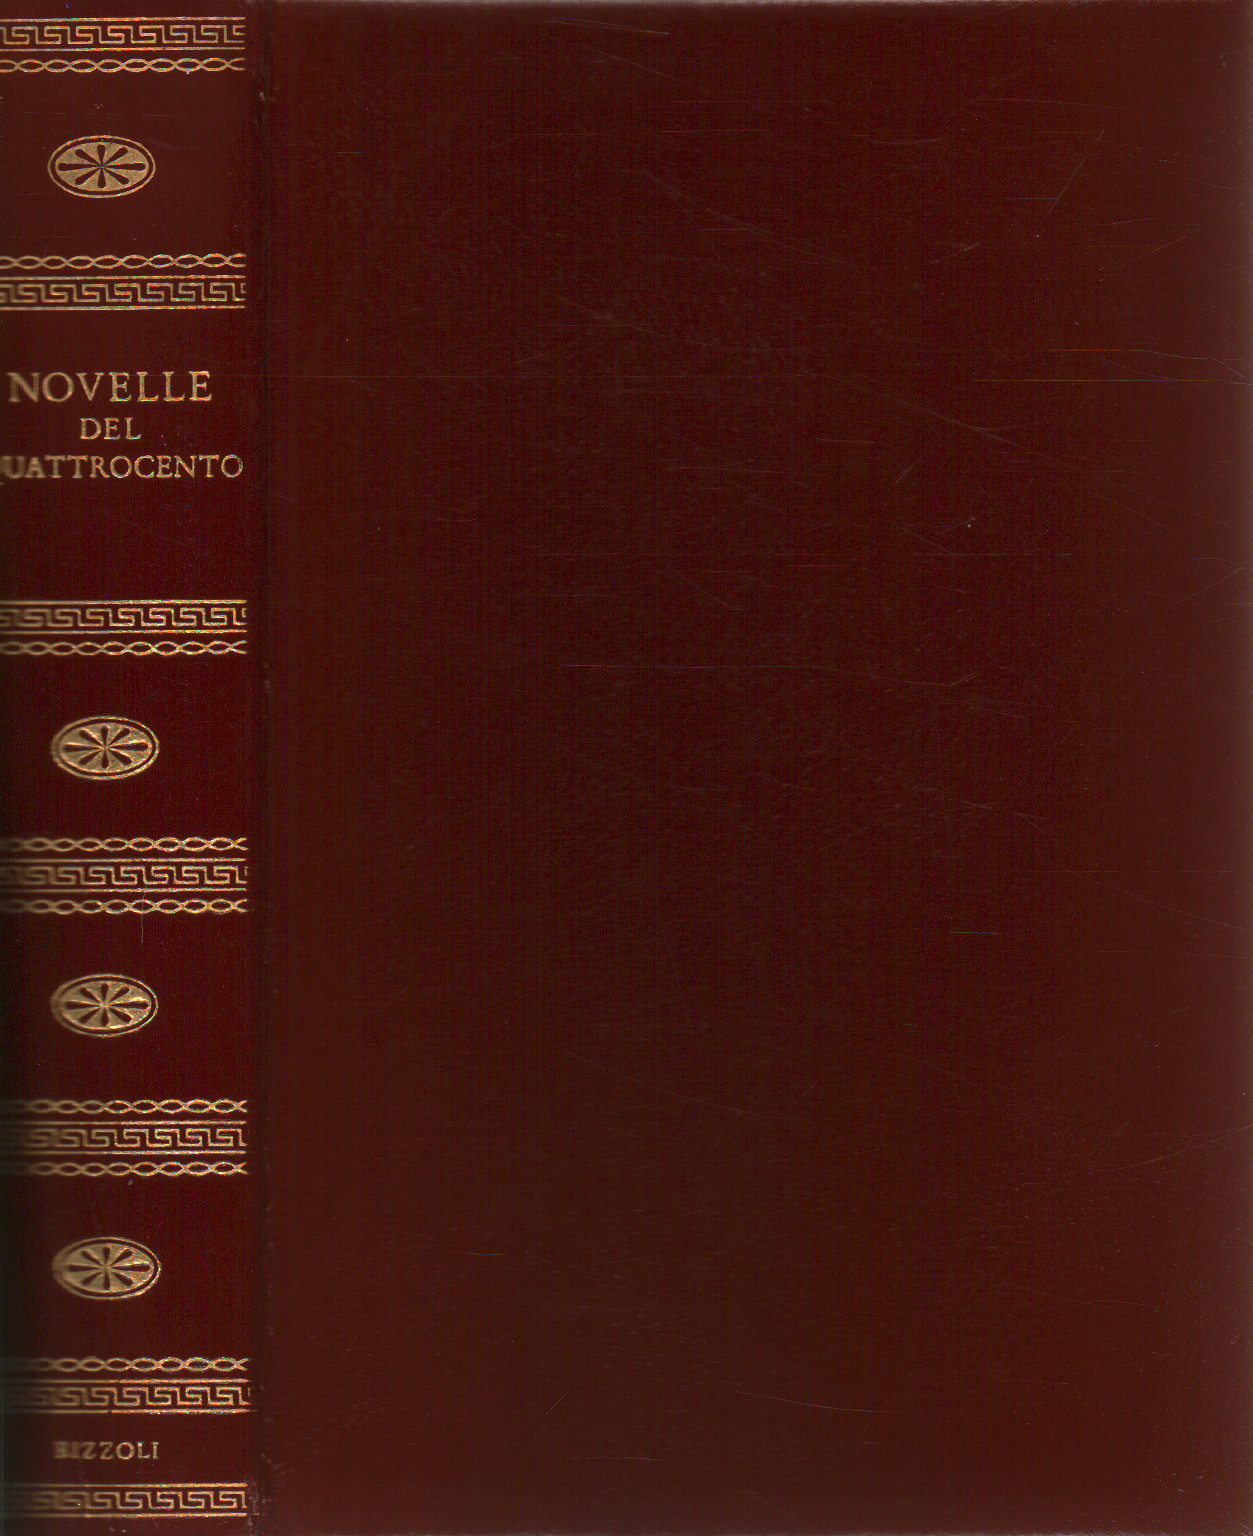 Novelle del Quattrocento, s.a.